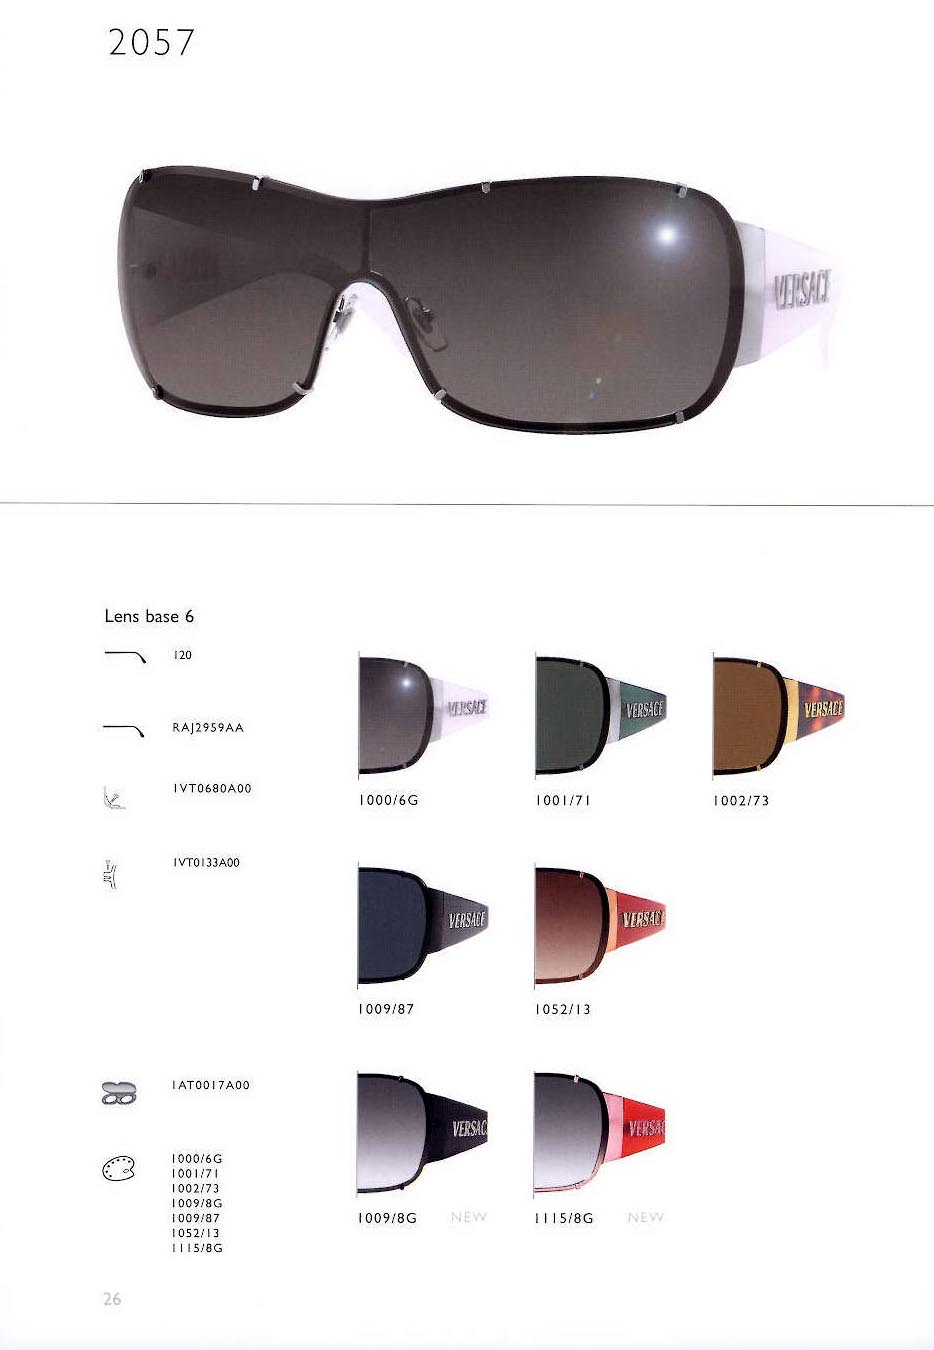 Sunglasses Versace 2057 11158G